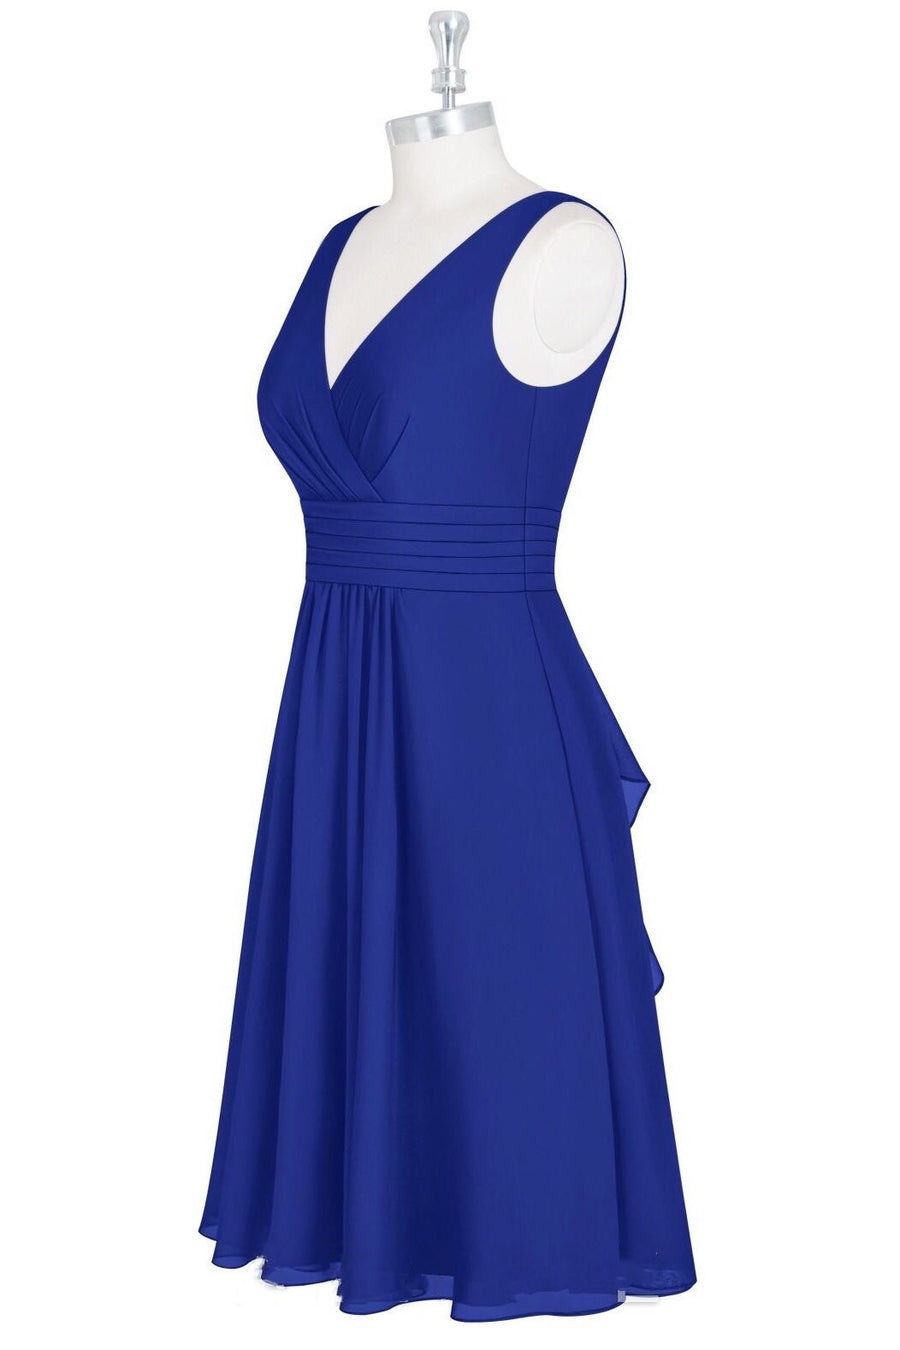 Royal Blue V-Neck Backless A-Line Short Bridesmaid Dress